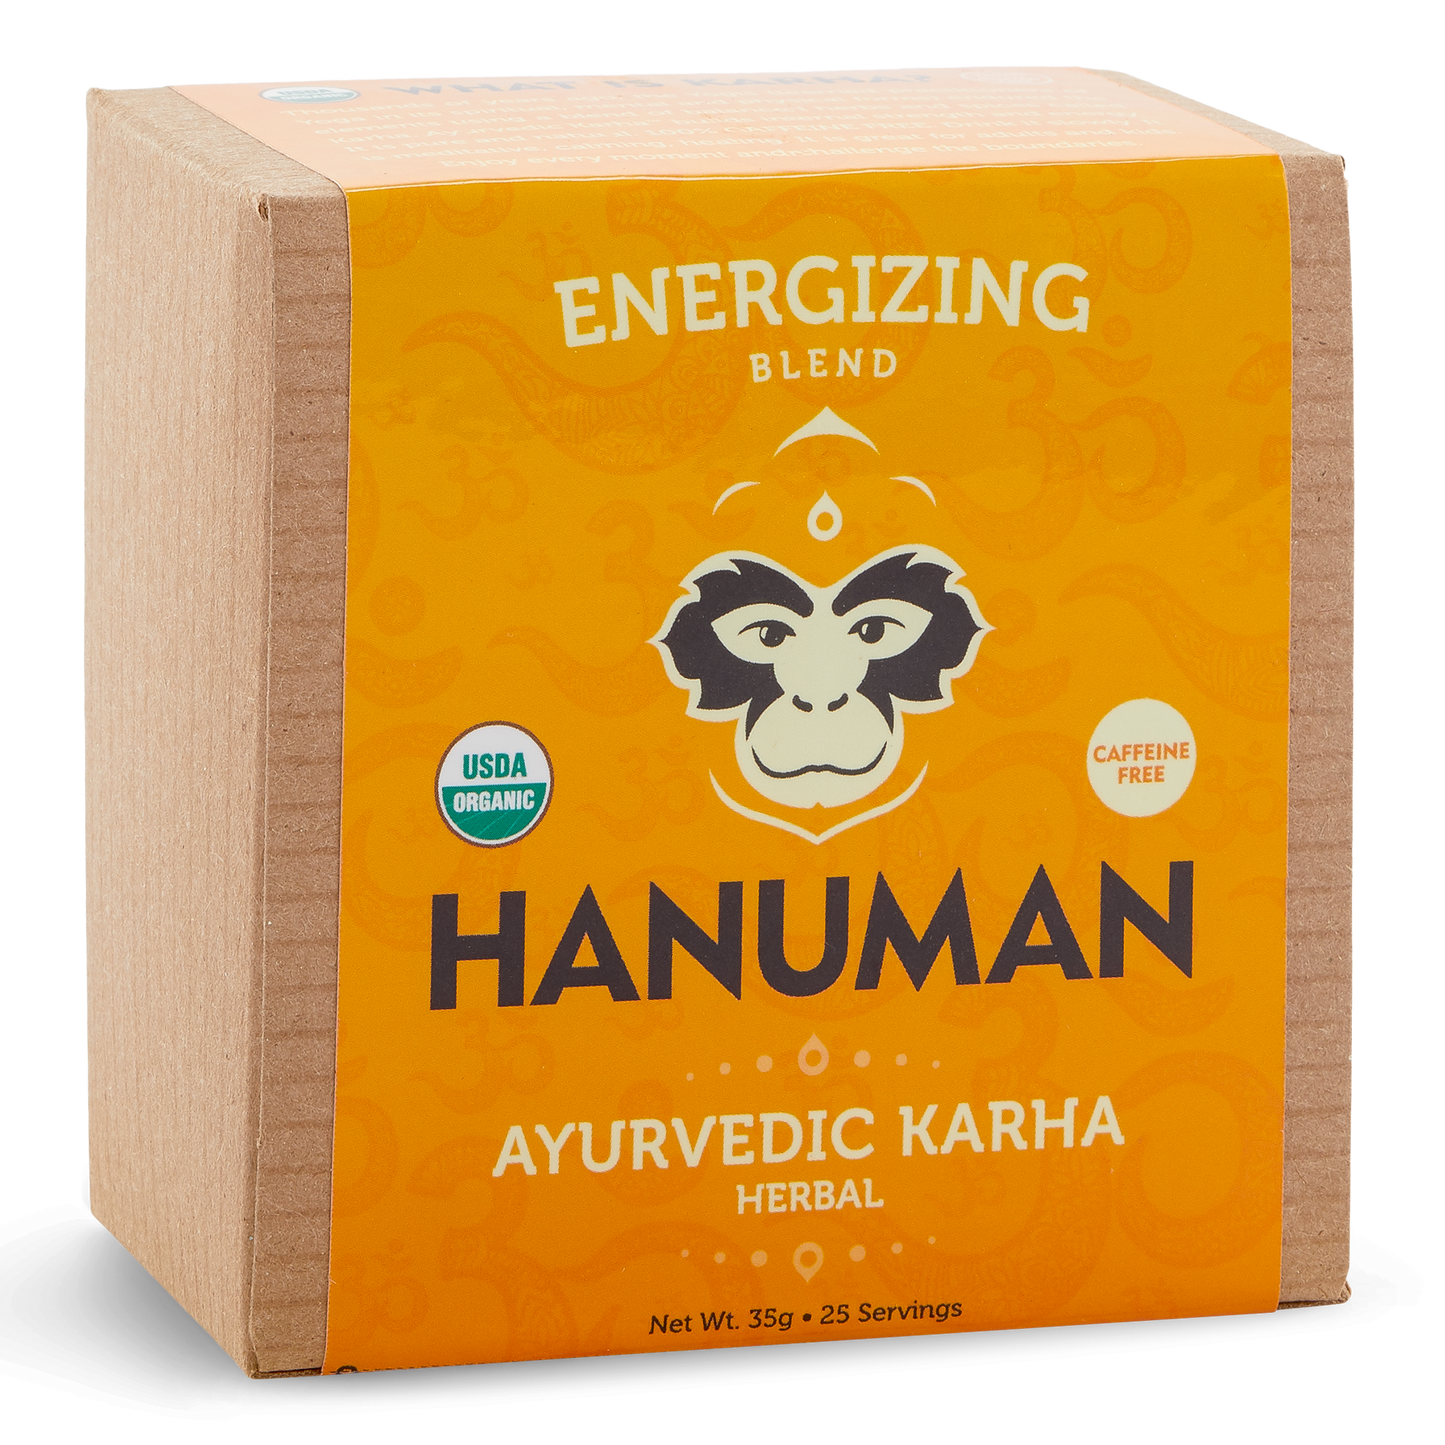 Ayurvedic & Organic Karha: Energizing (Spices, No Caffeine)